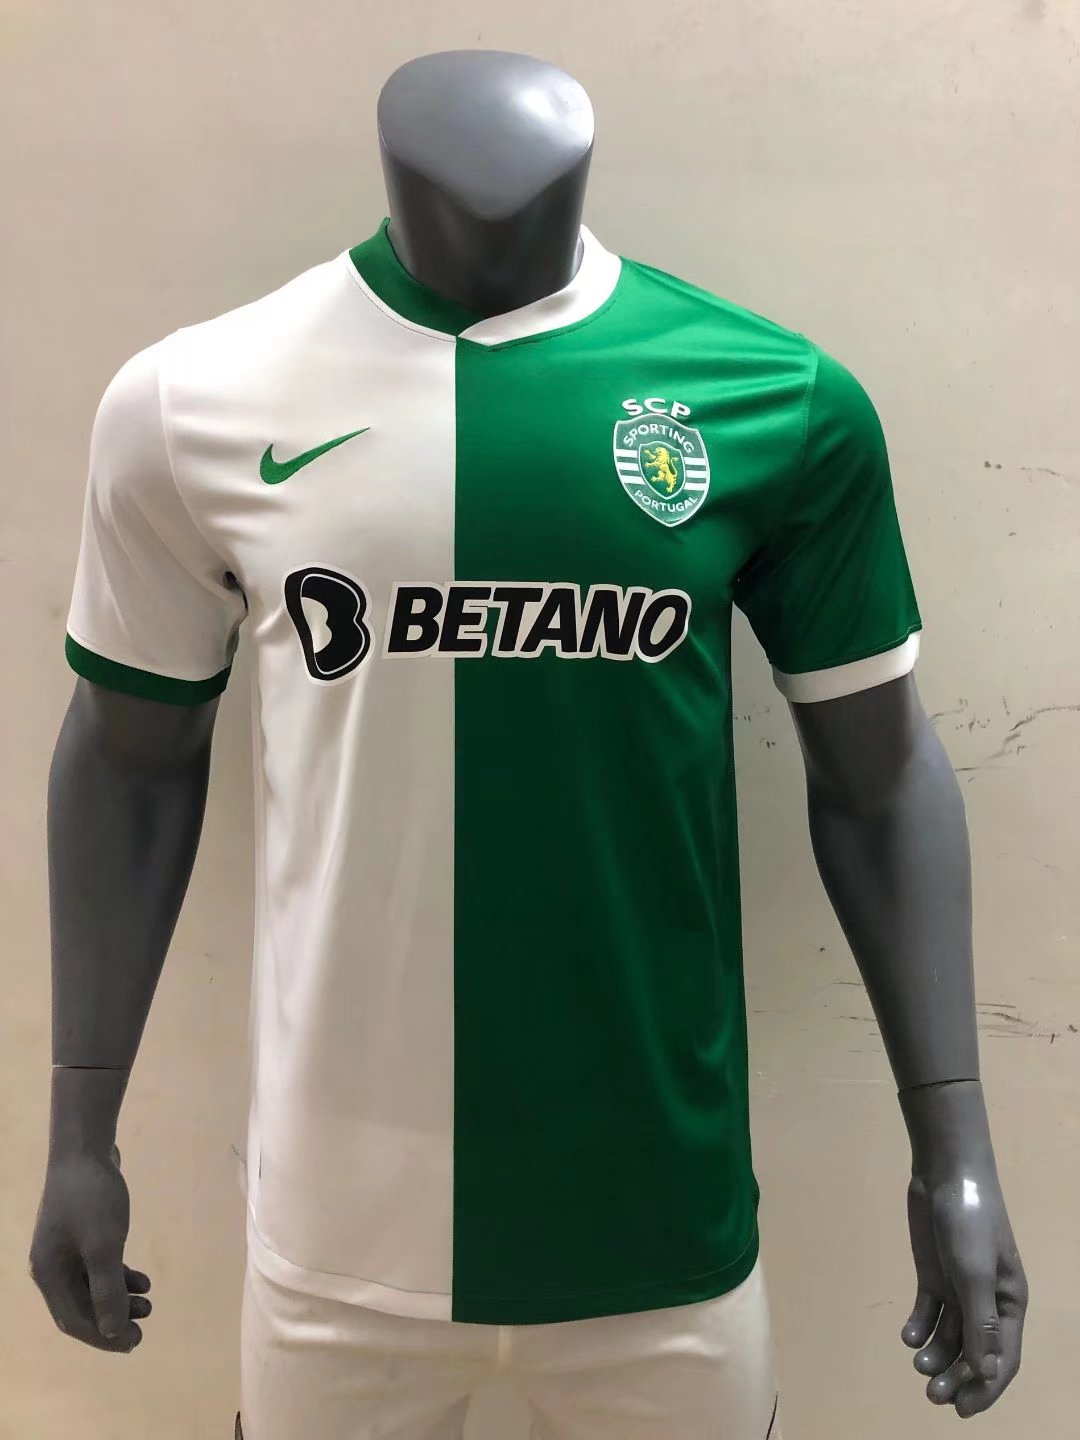 Sporting Portugal Camisola Soccer Jersey Replica Stromp Mens 2021/22